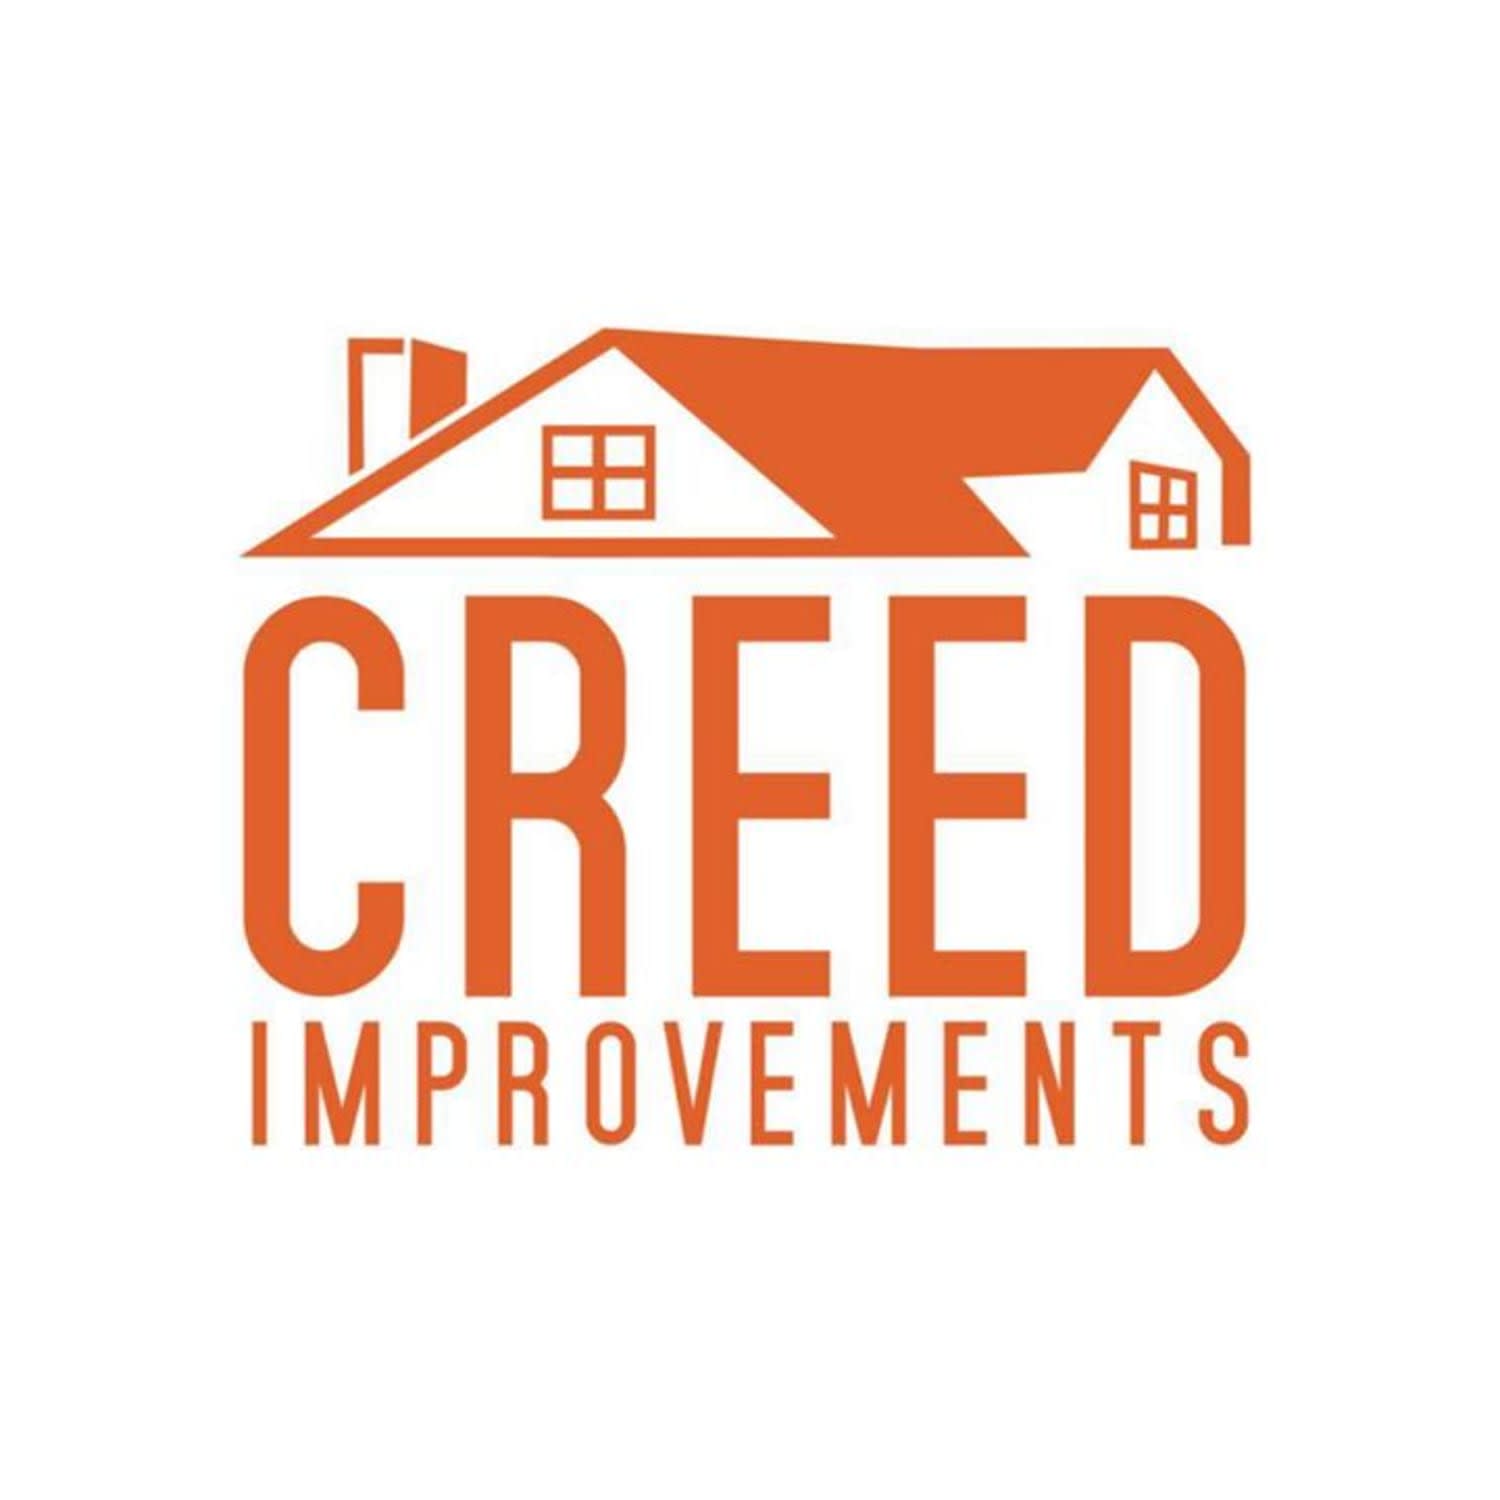 Creed Improvements